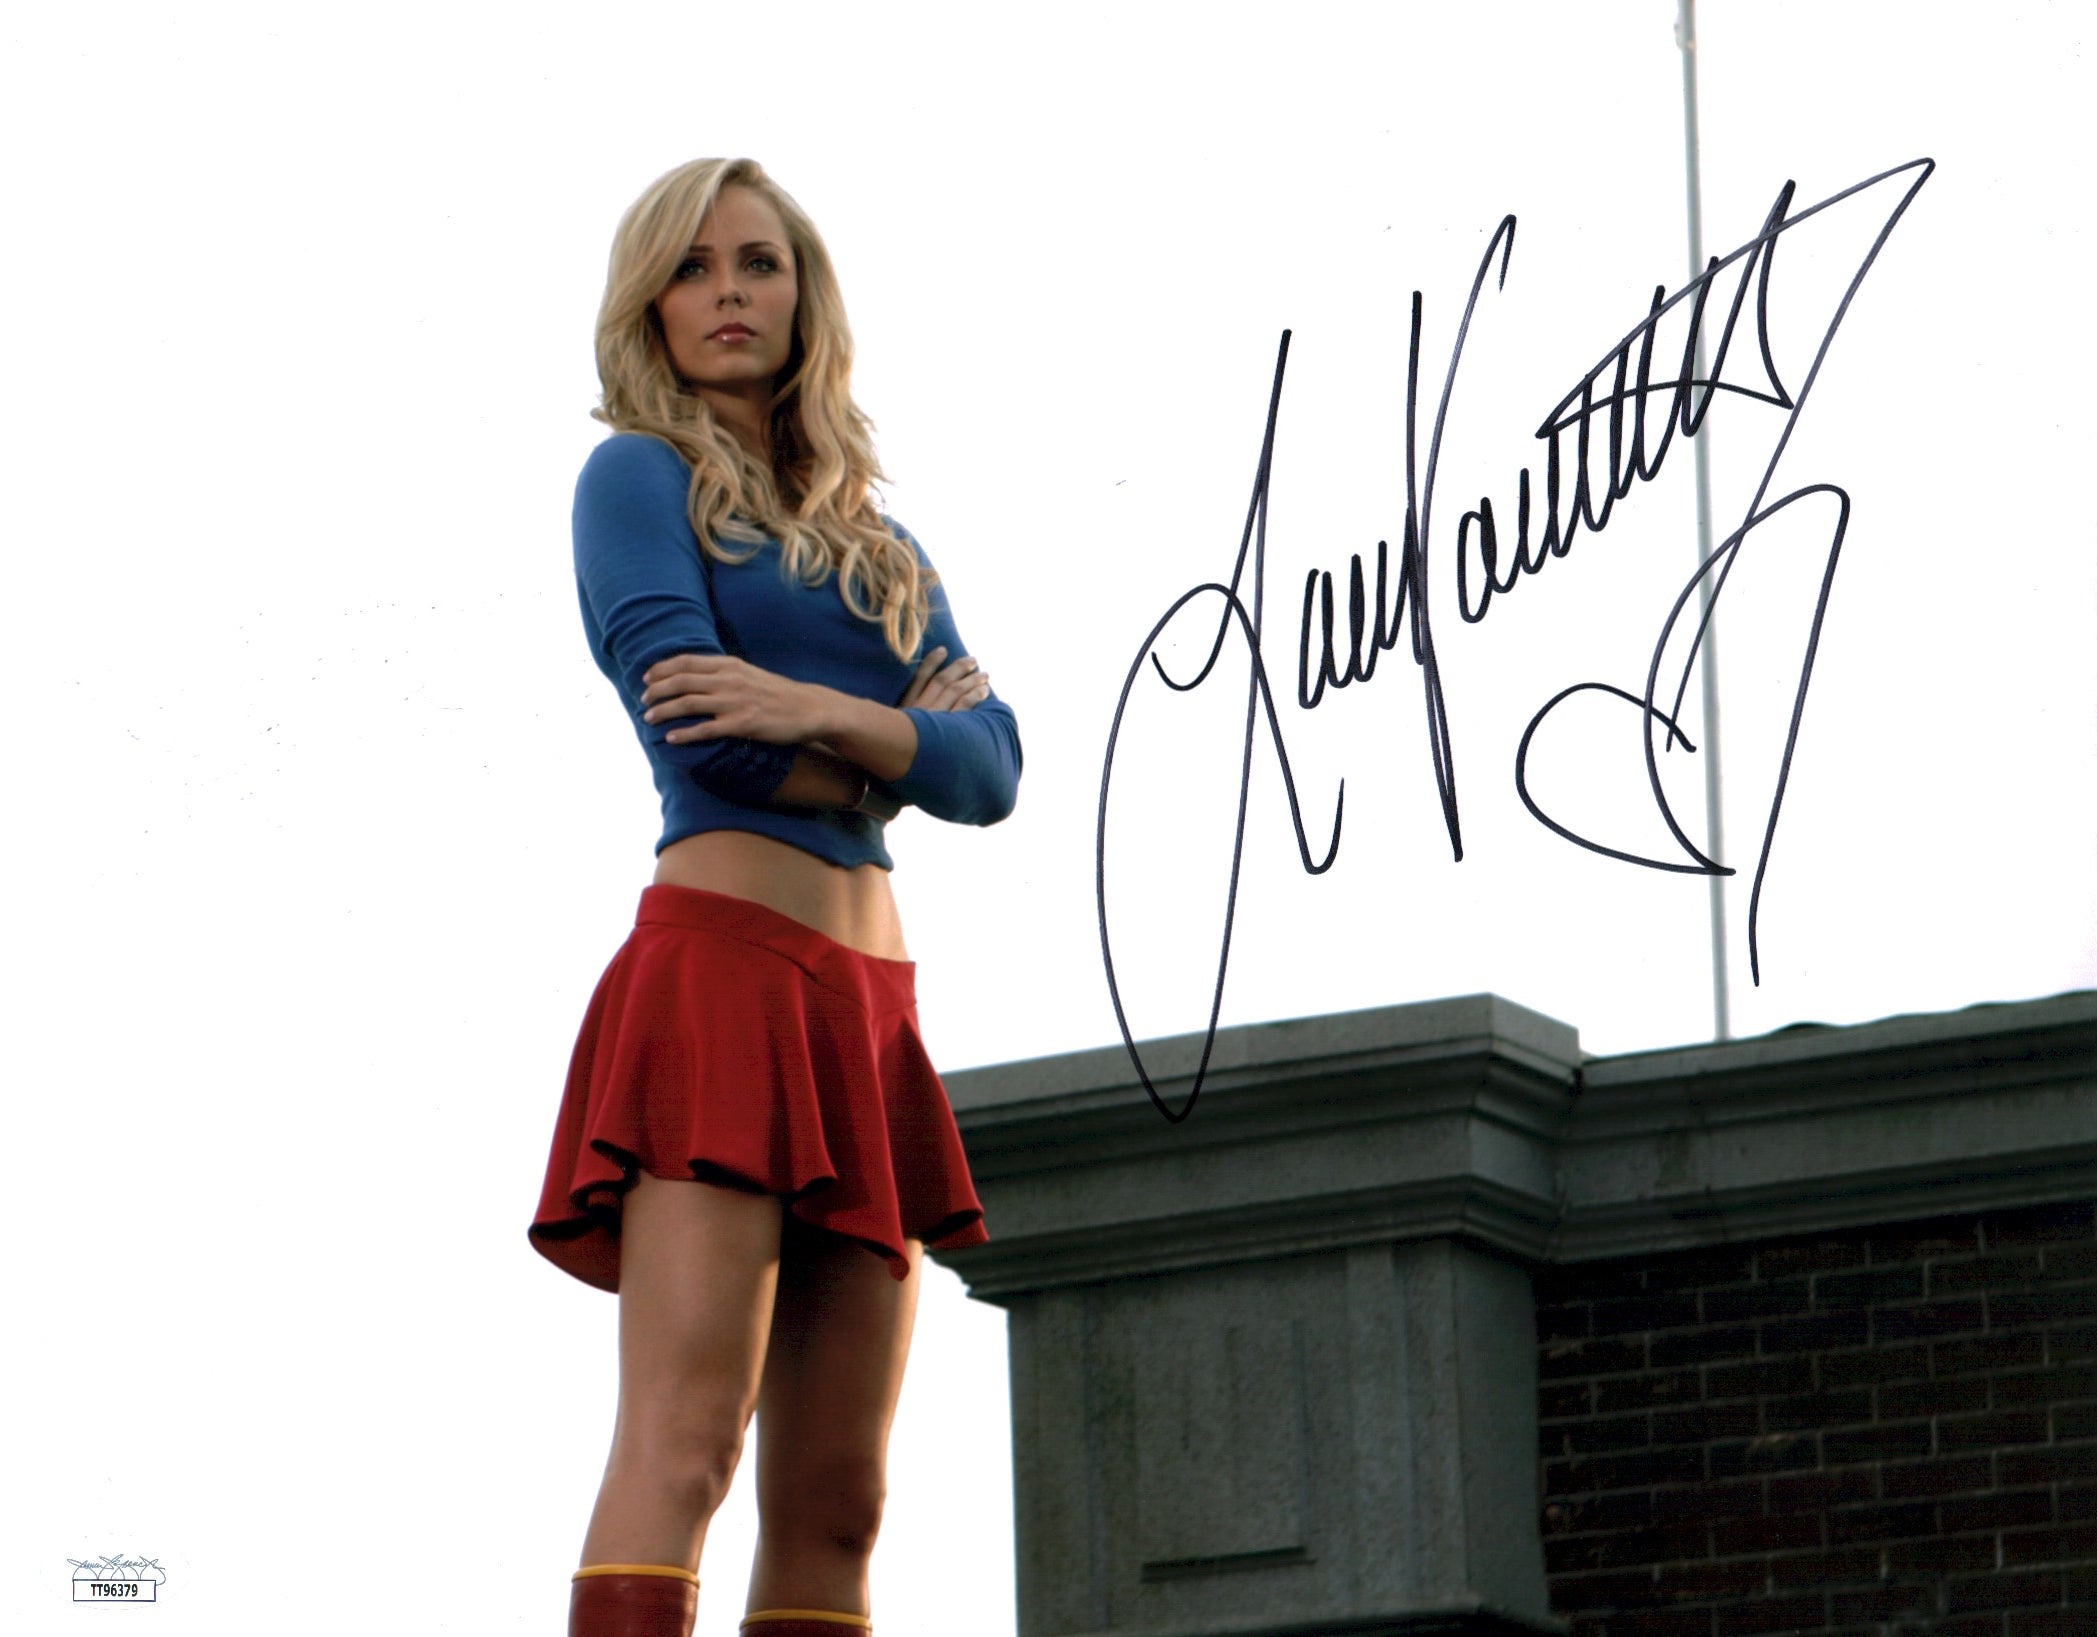 Laura Vandervoort Smallville 11x14 Signed Photo Poster JSA COA Certified Autograph